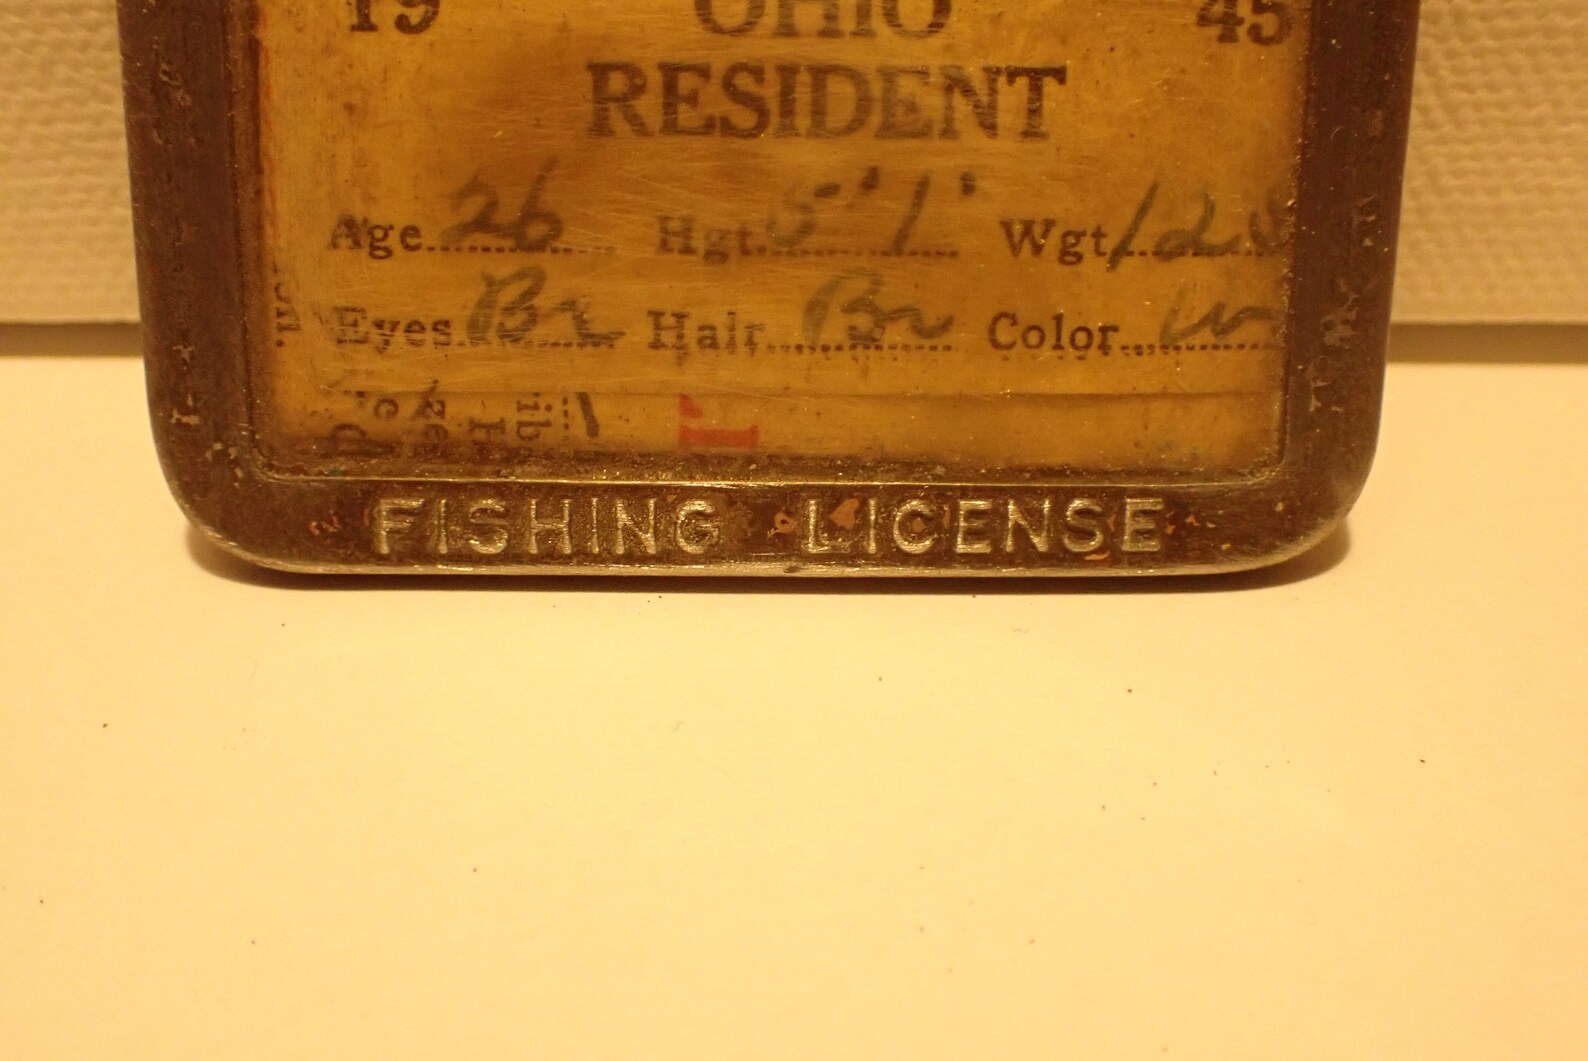 1945 Ohio resident fishing license in the original holder